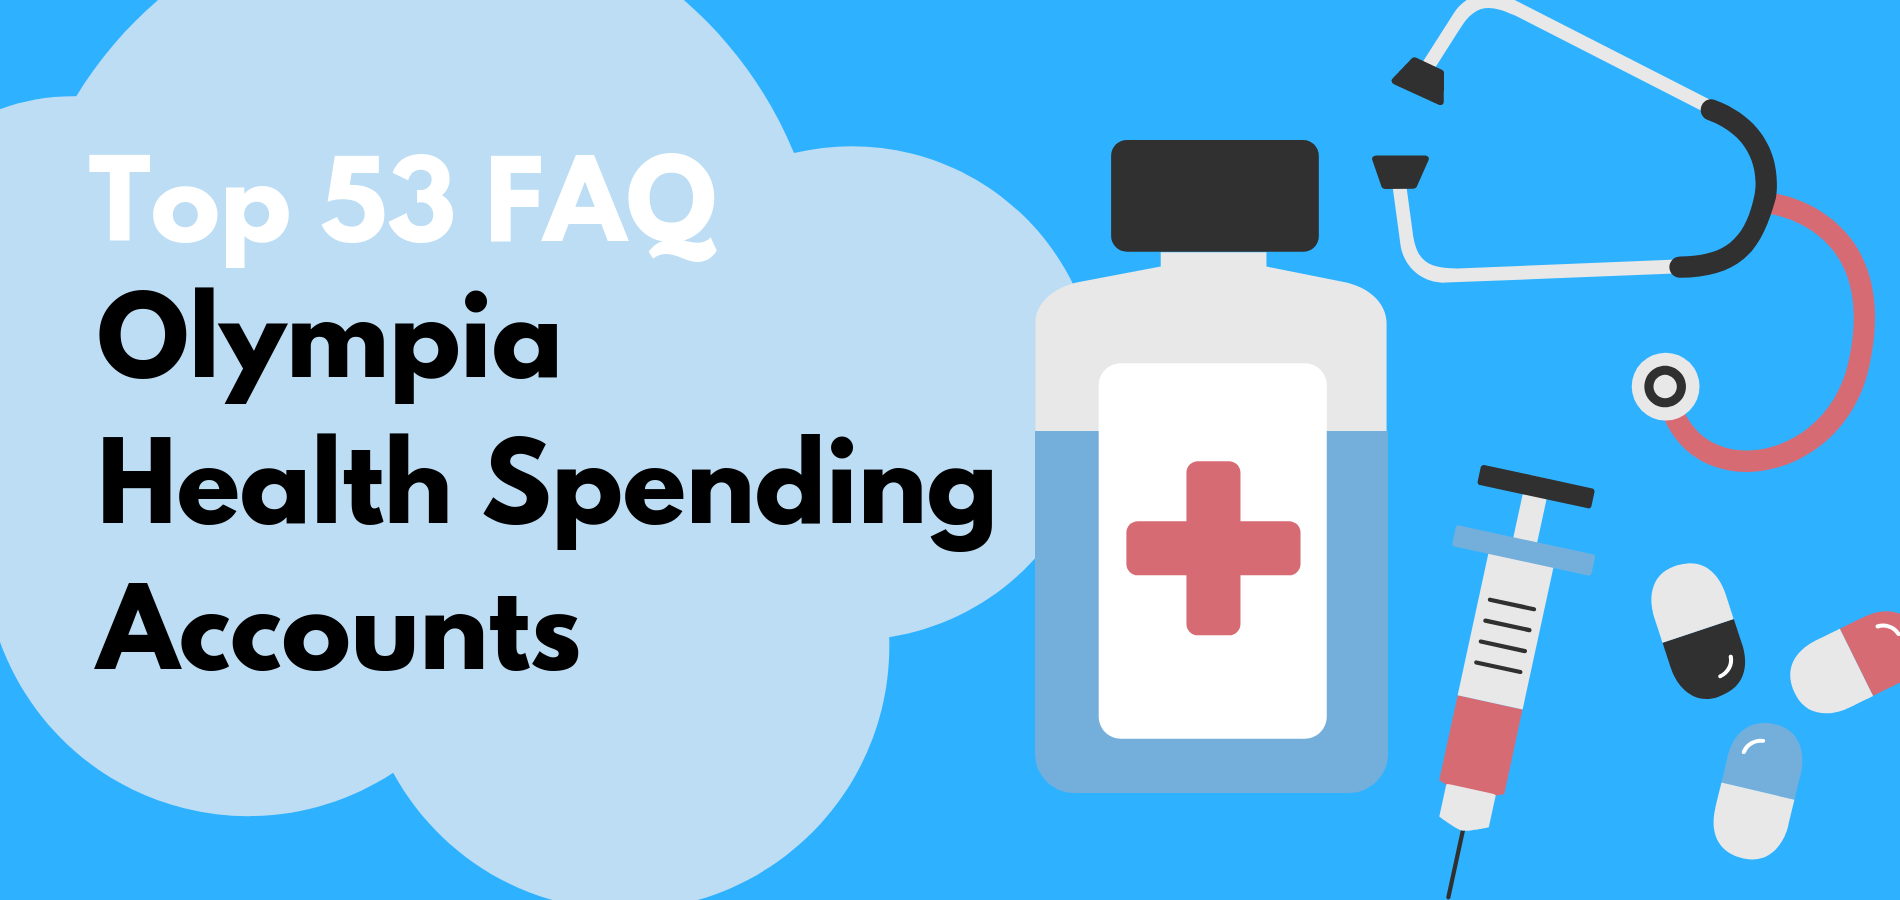 Top 53 FAQ Olympia Health Spending Accounts